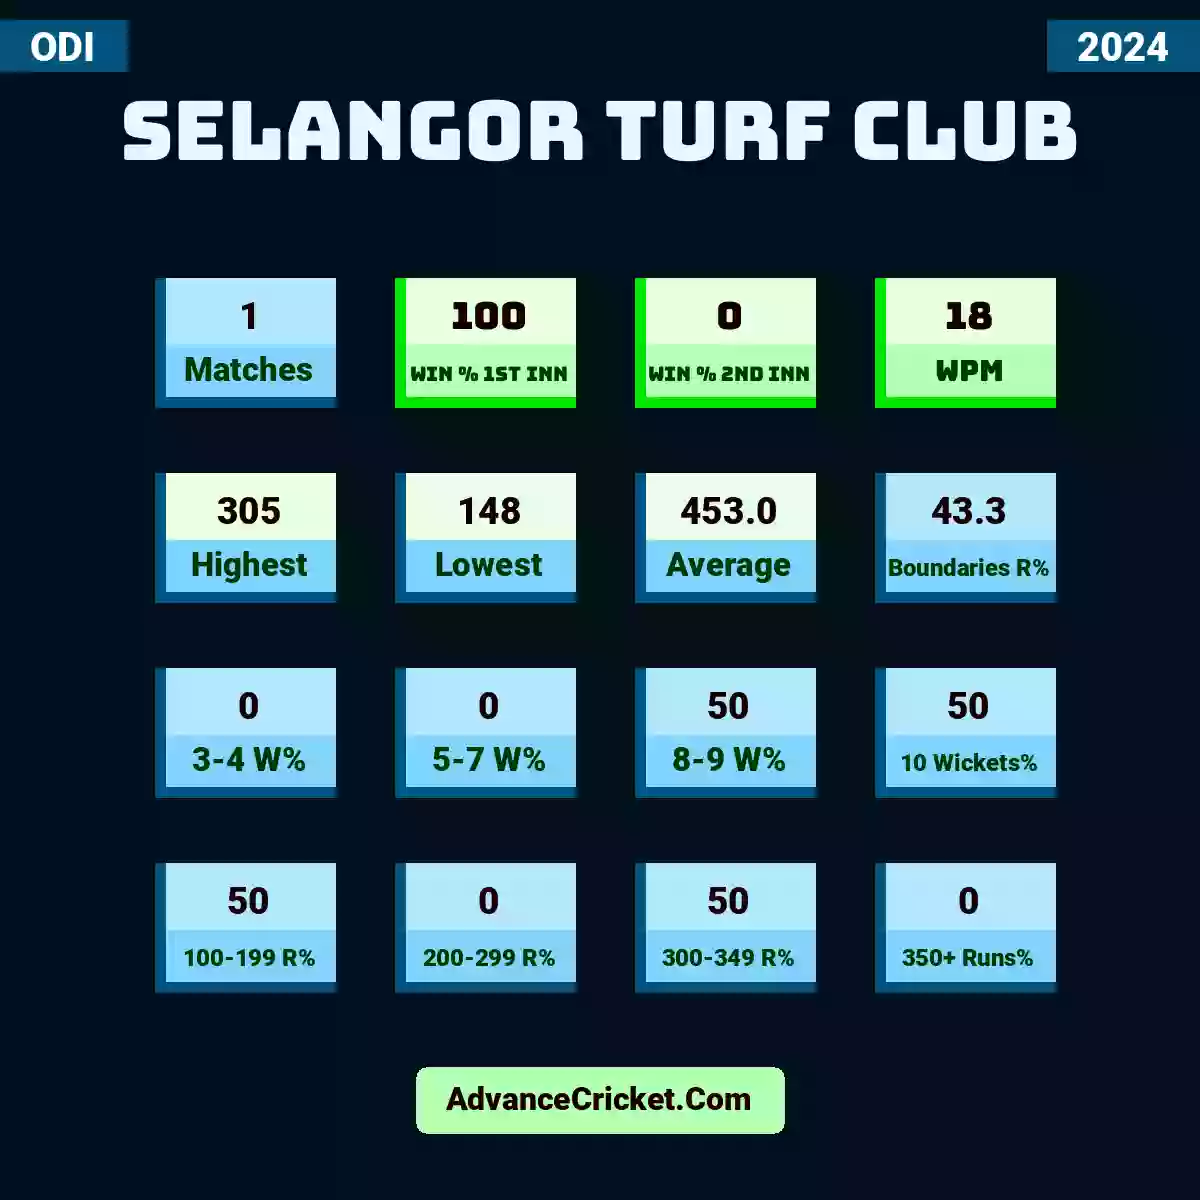 Image showing Selangor Turf Club with Matches: 1, Win % 1st Inn: 100, Win % 2nd Inn: 0, WPM: 18, Highest: 305, Lowest: 148, Average: 453.0, Boundaries R%: 43.3, 3-4 W%: 0, 5-7 W%: 0, 8-9 W%: 50, 10 Wickets%: 50, 100-199 R%: 50, 200-299 R%: 0, 300-349 R%: 50, 350+ Runs%: 0.